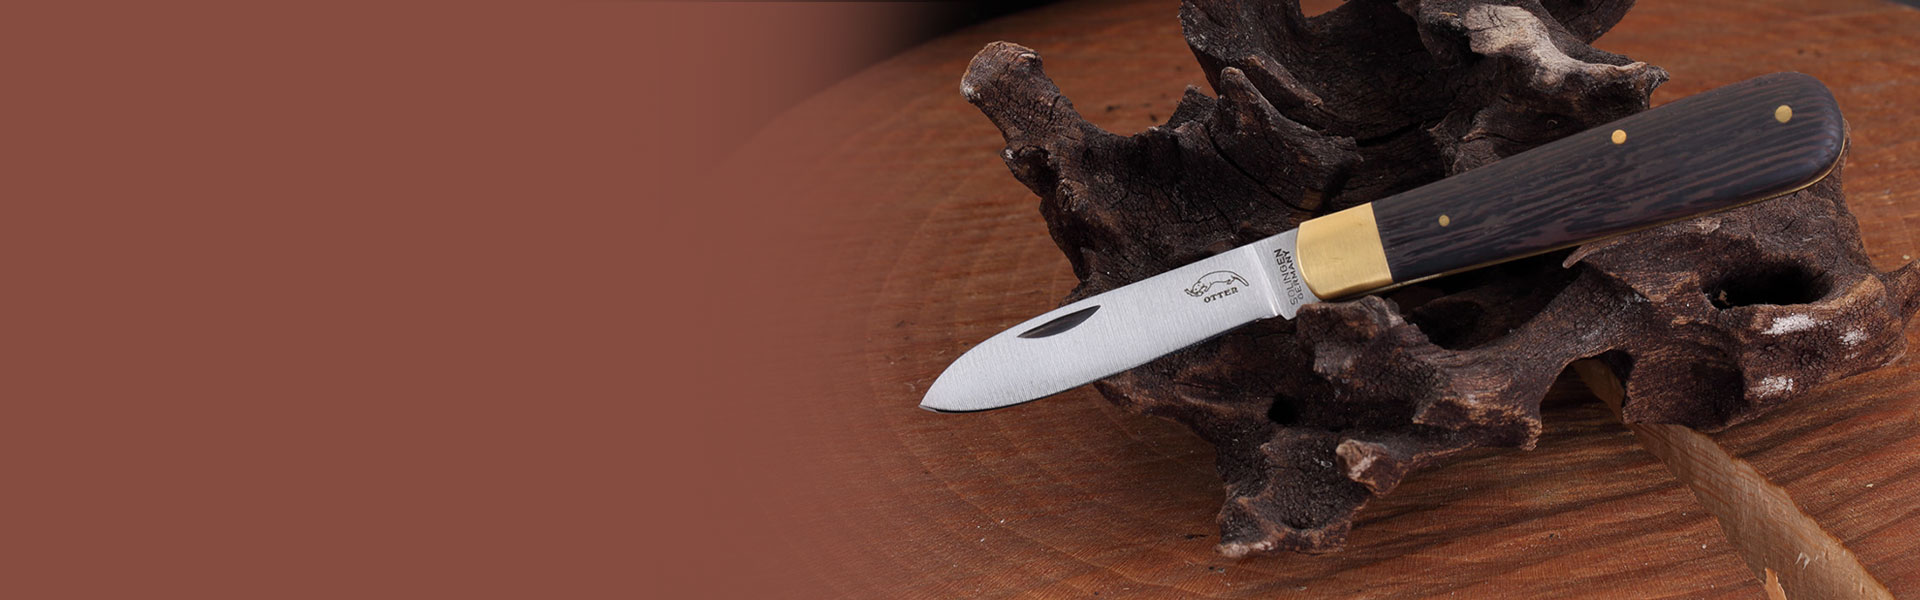 Otter Messer Pocket Knives made in Germany - Top Shelf Worldwide